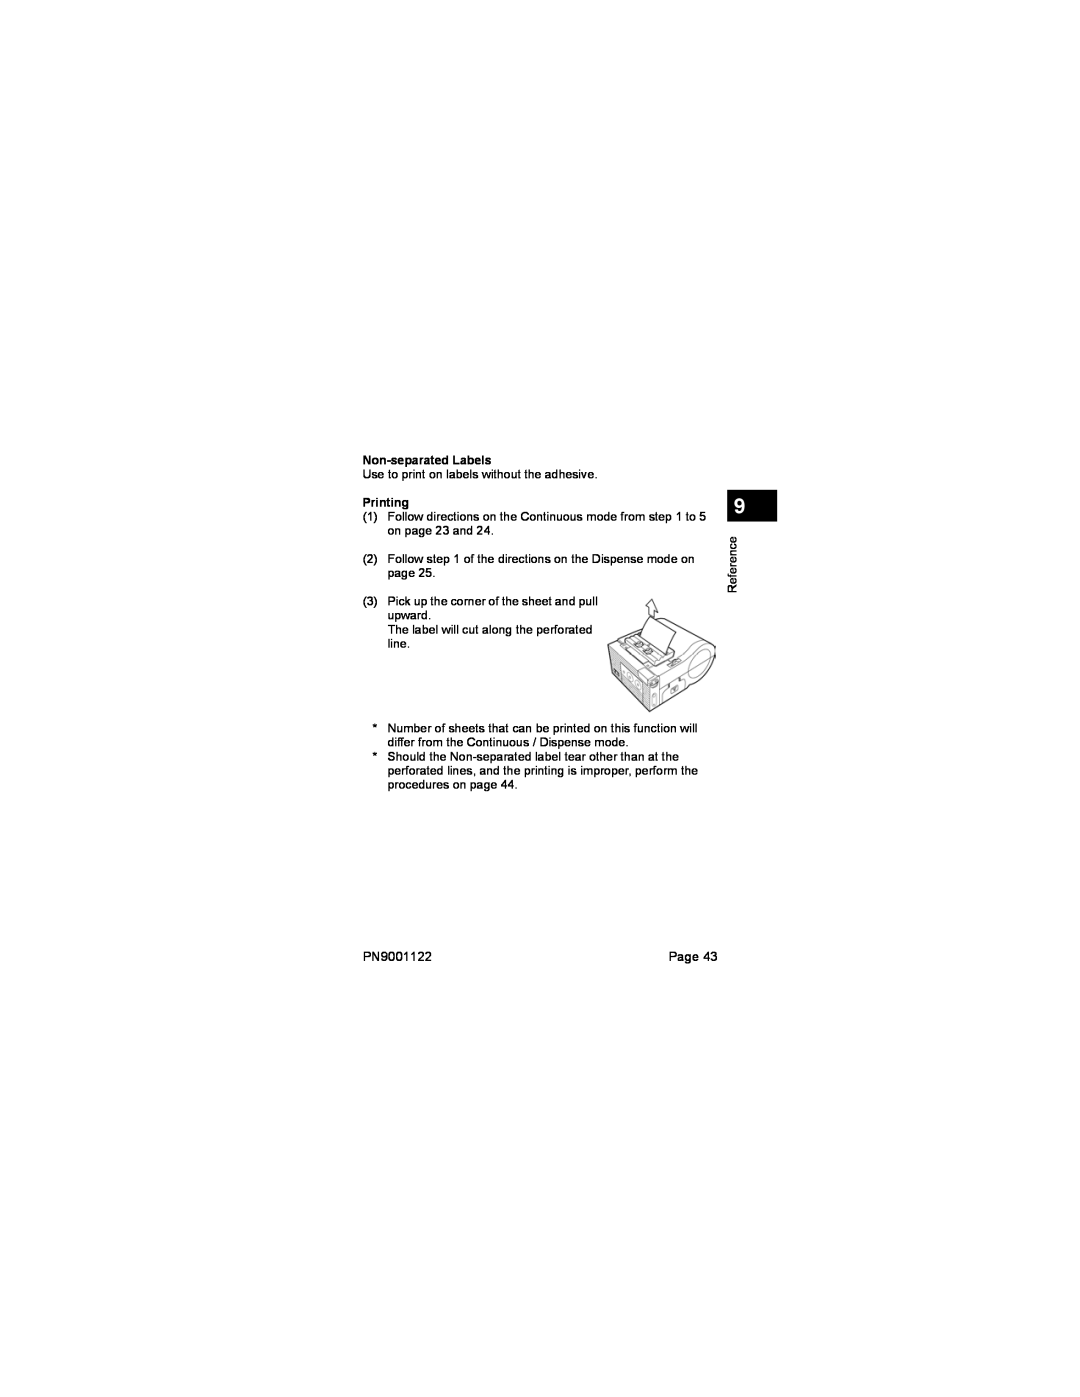 SATO MB200 manual PN9001122, Non-separated Labels, Printing 